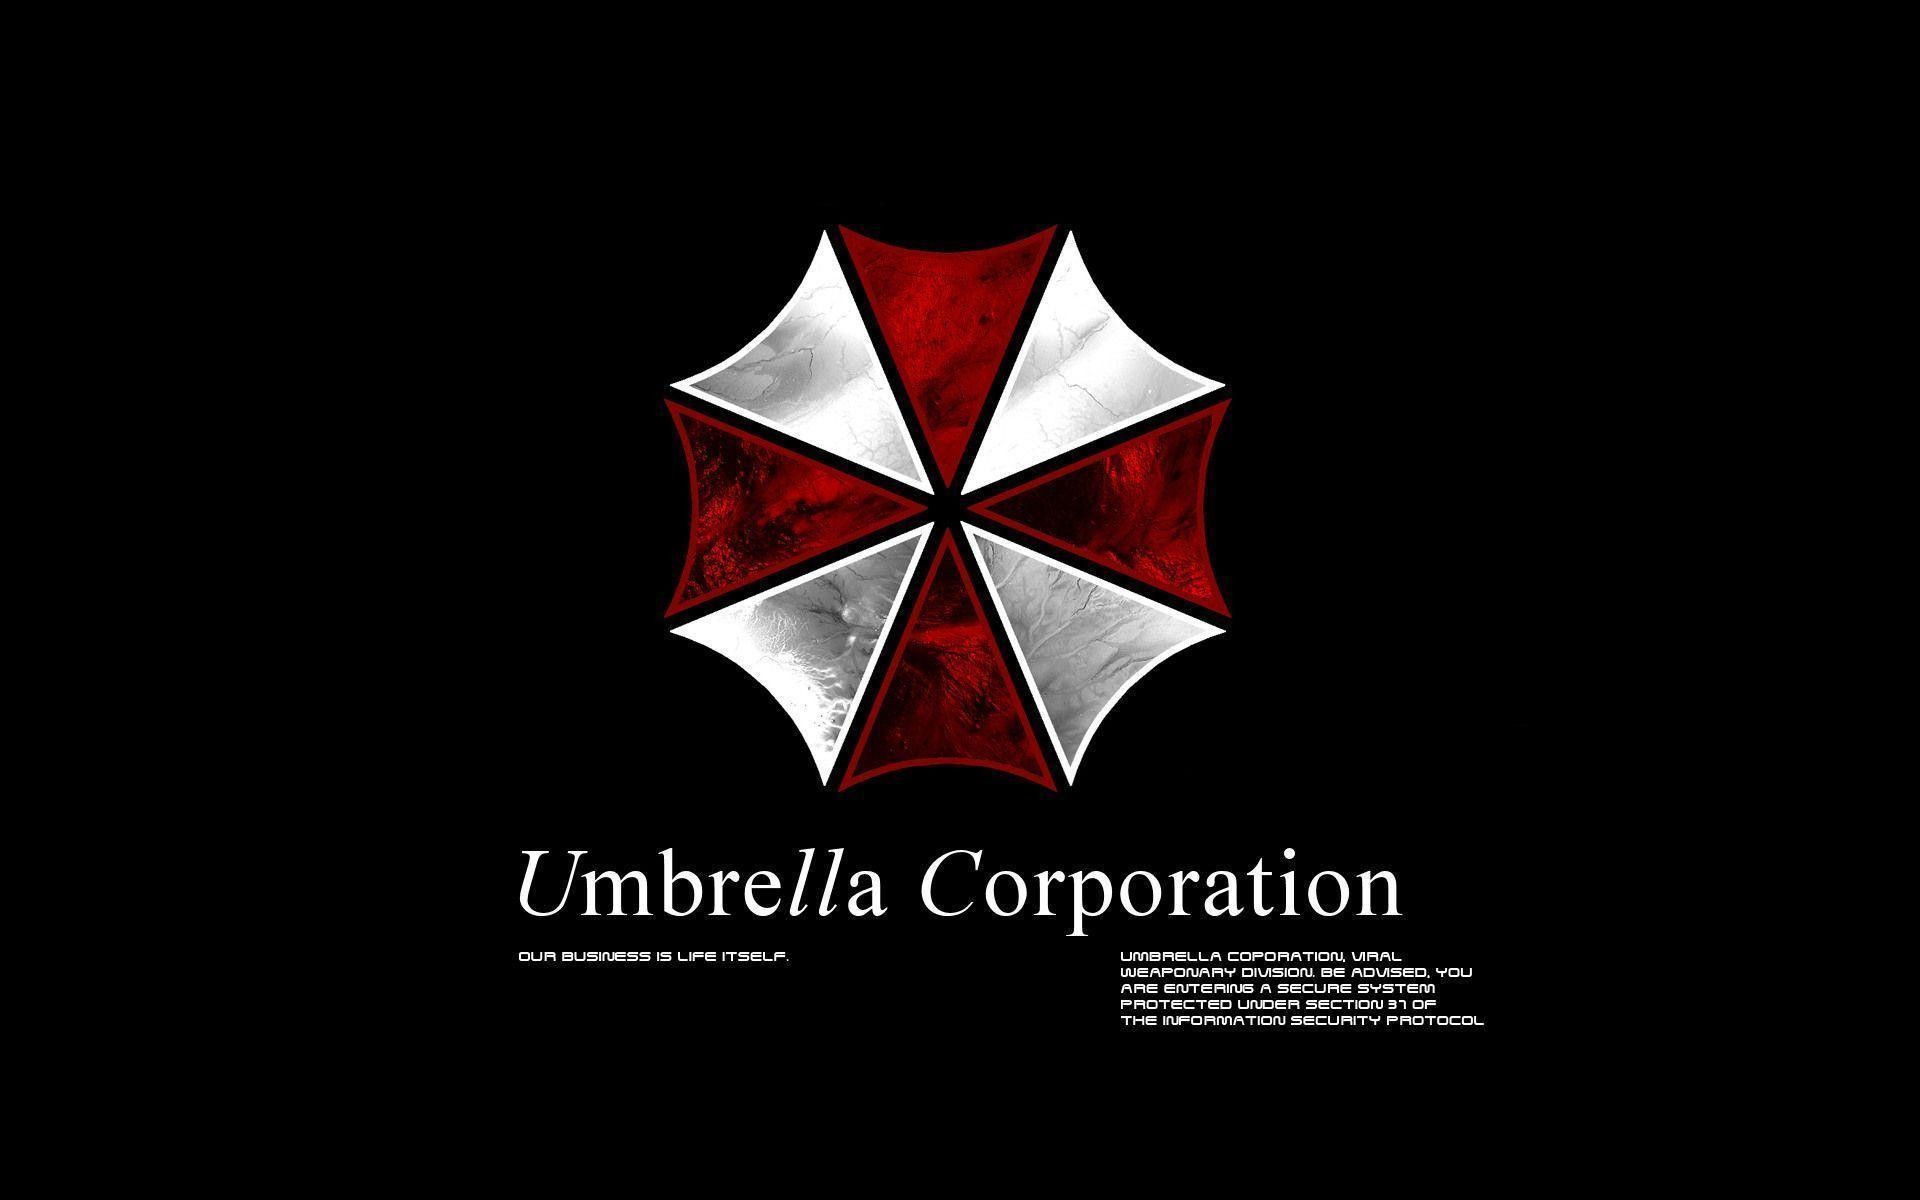 Umbrella Corporation Wallpapers – Full HD wallpaper search